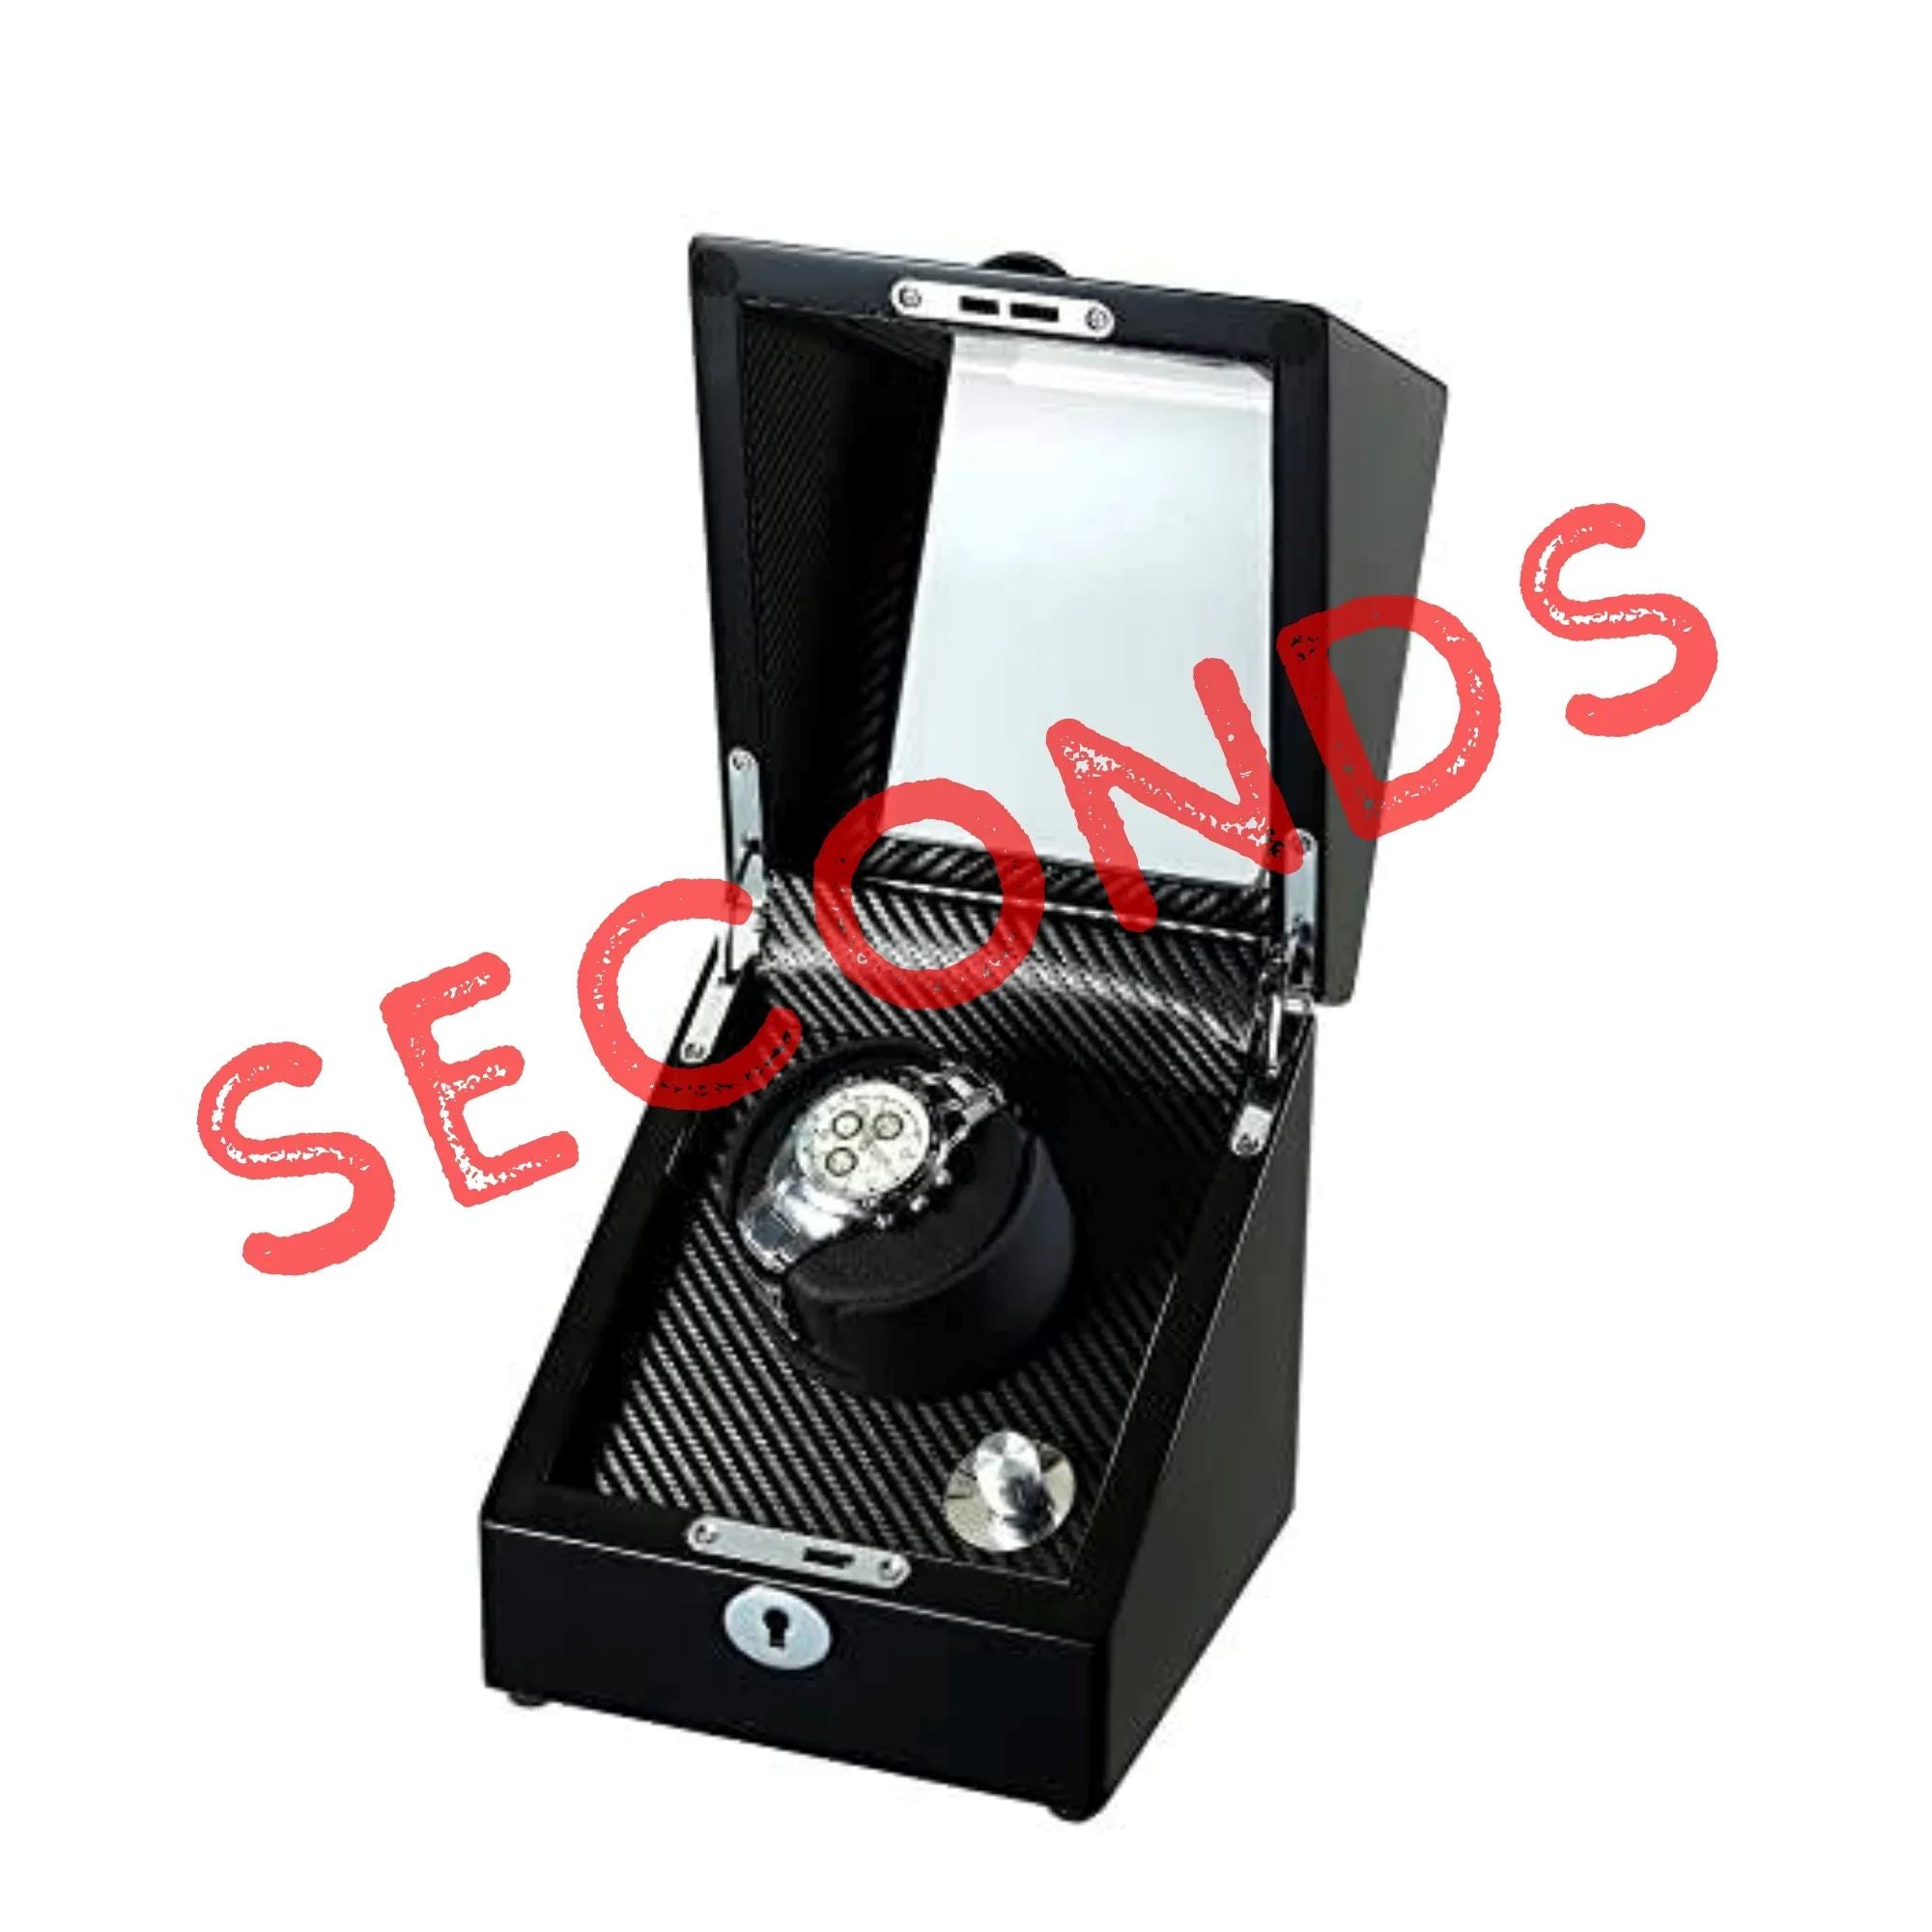 Seconds - Waratah Watch Winder Box for 1 Watch in Black (f) Seconds Clinks 